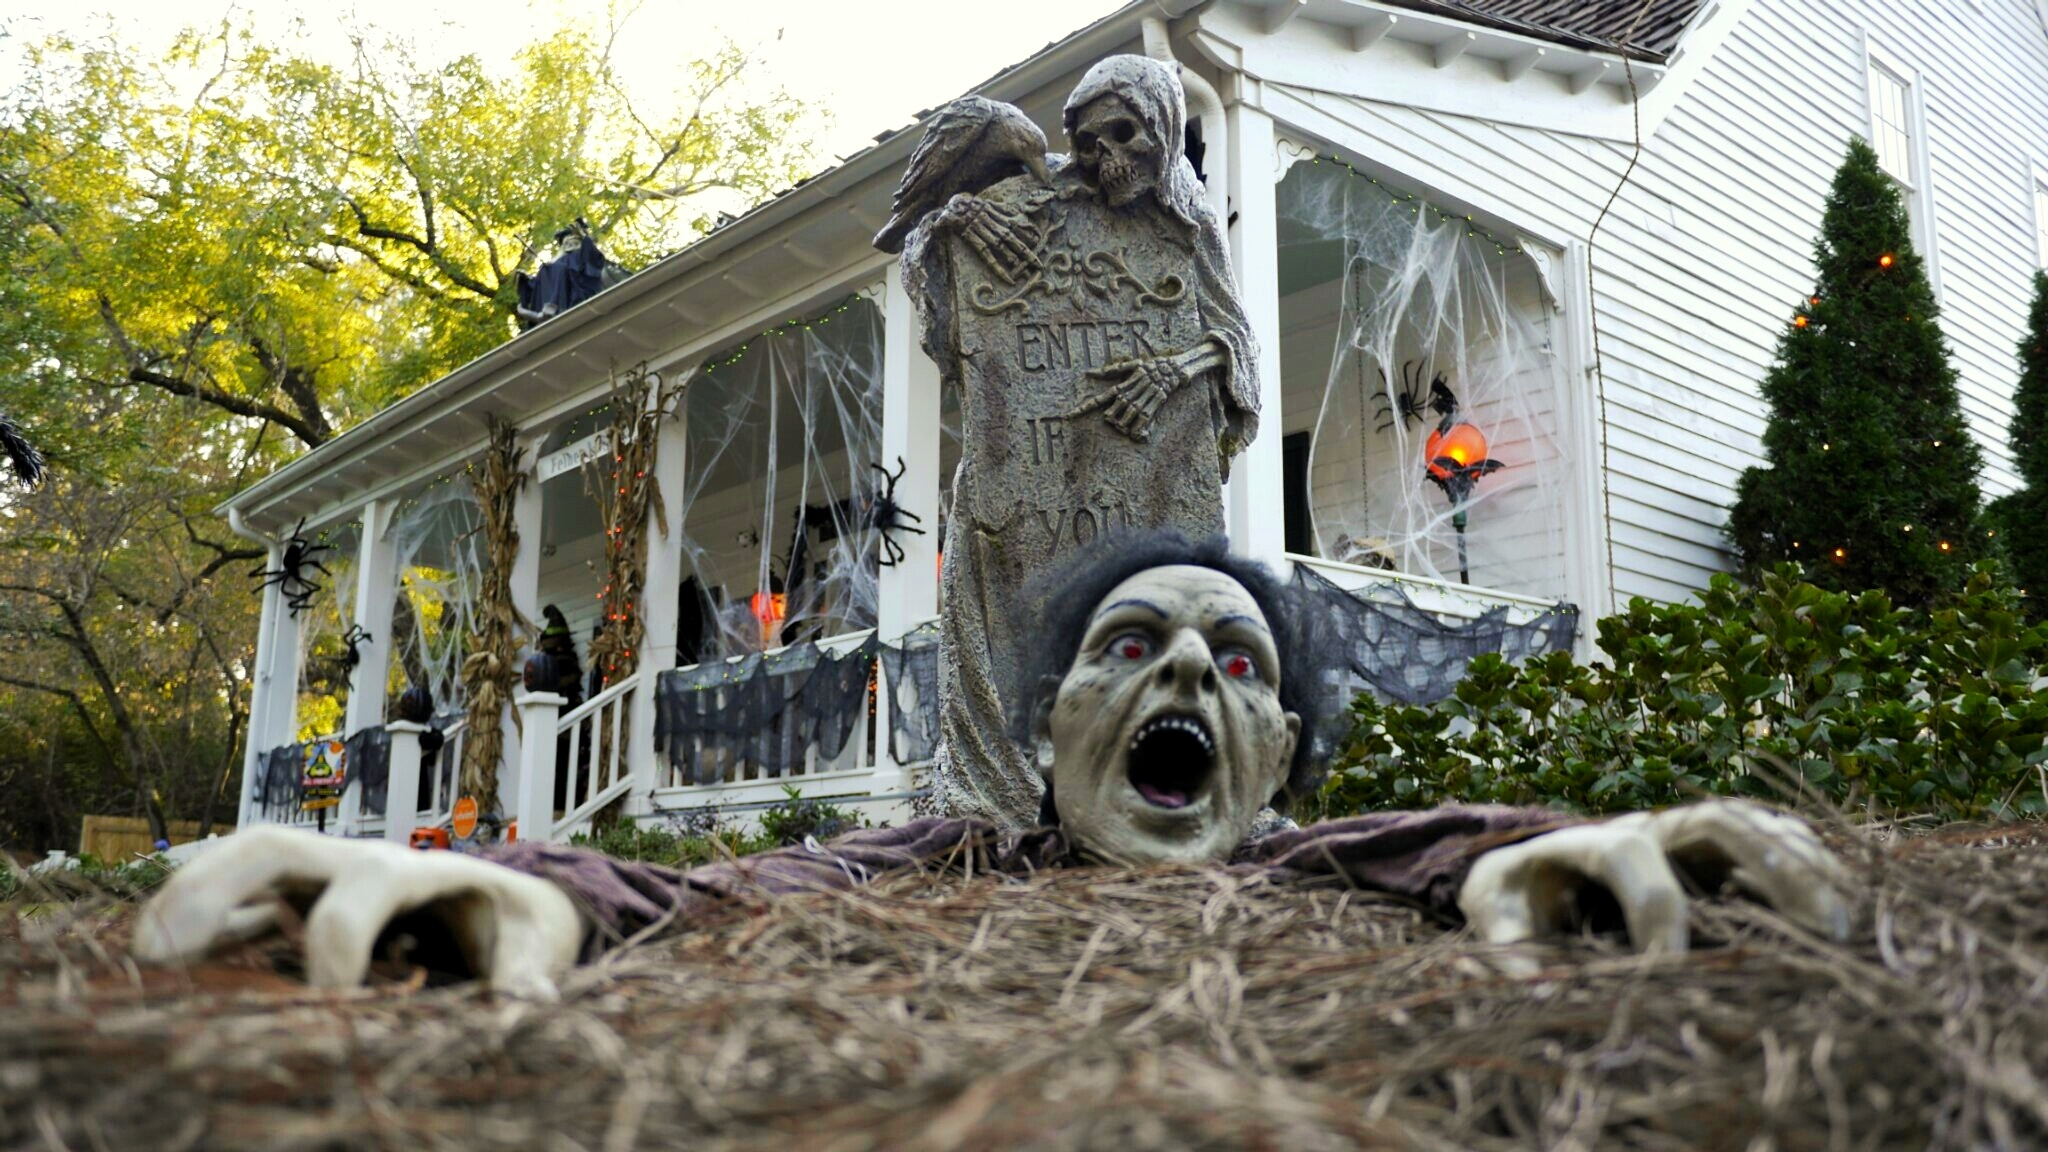 Best Texas Halloween events: Lubbock haunted theme park makes list